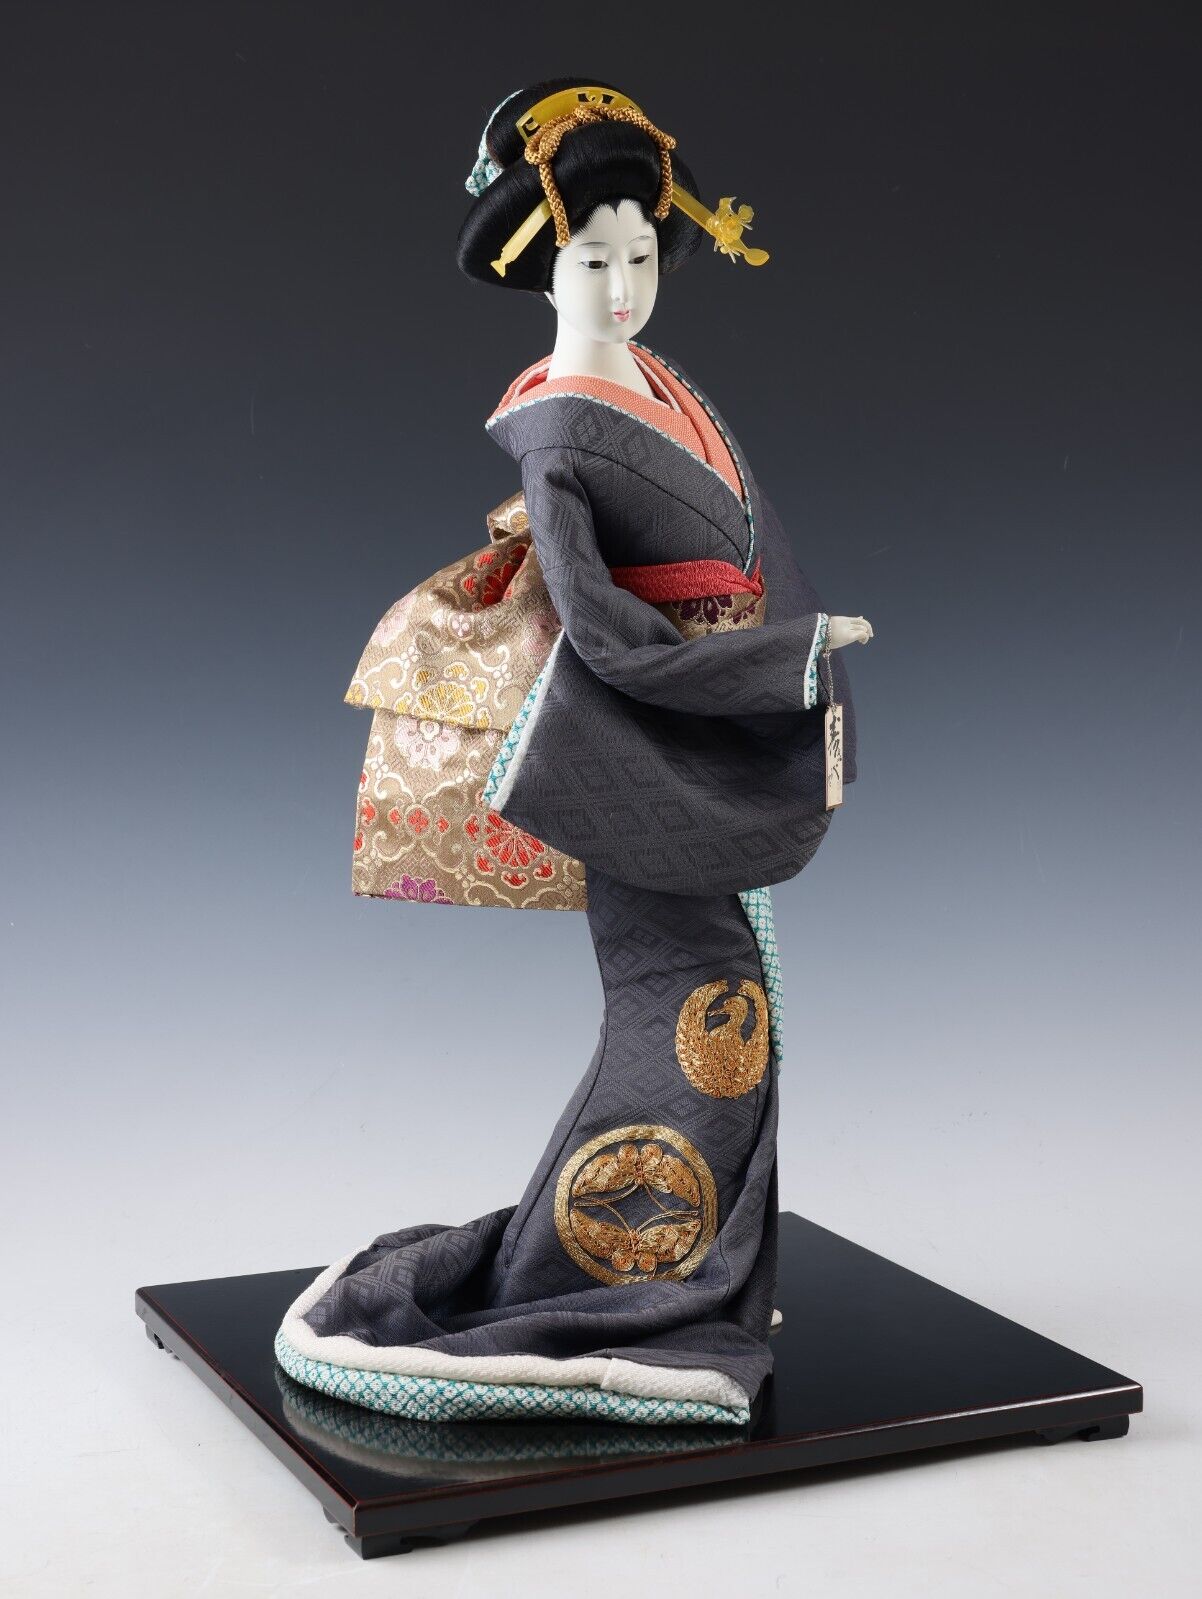 Vintage Japanese Traditional Art Collectible Geisha Doll in Kimono from Showa Era.